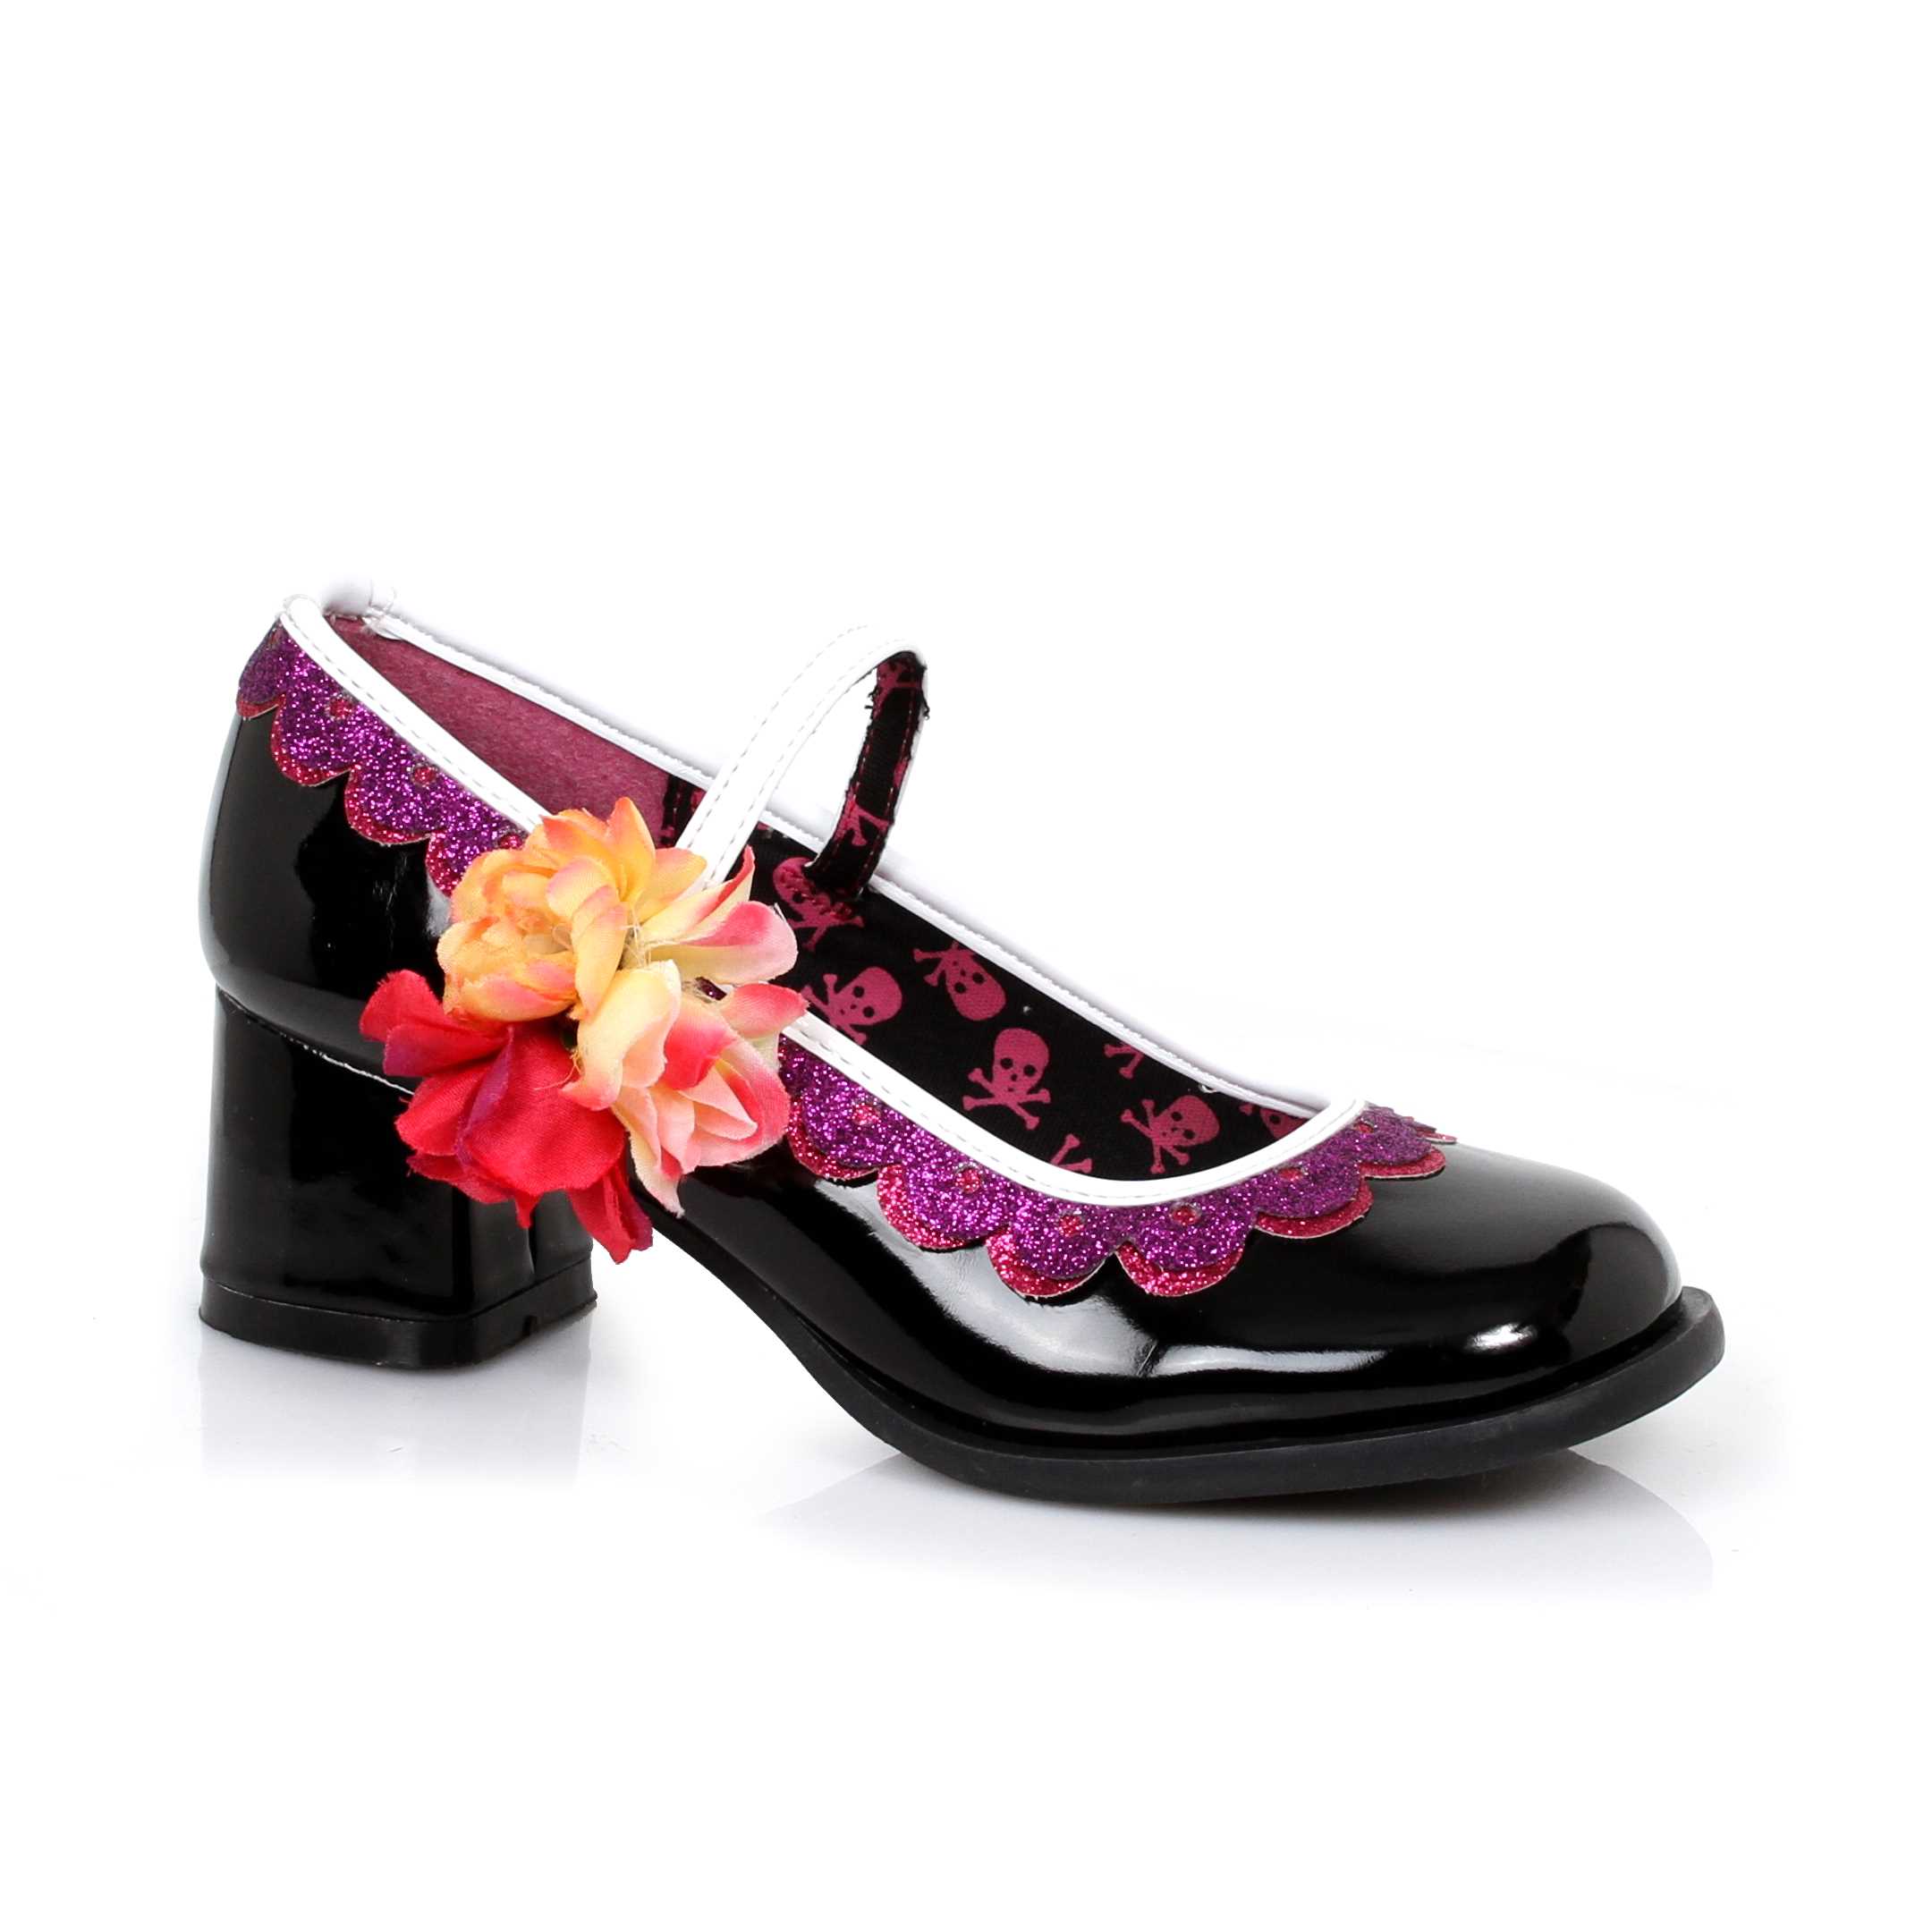 175-ROSA, 1.75" Heel Girls Mary Jane Sugar Skull Shoes - image 1 of 2